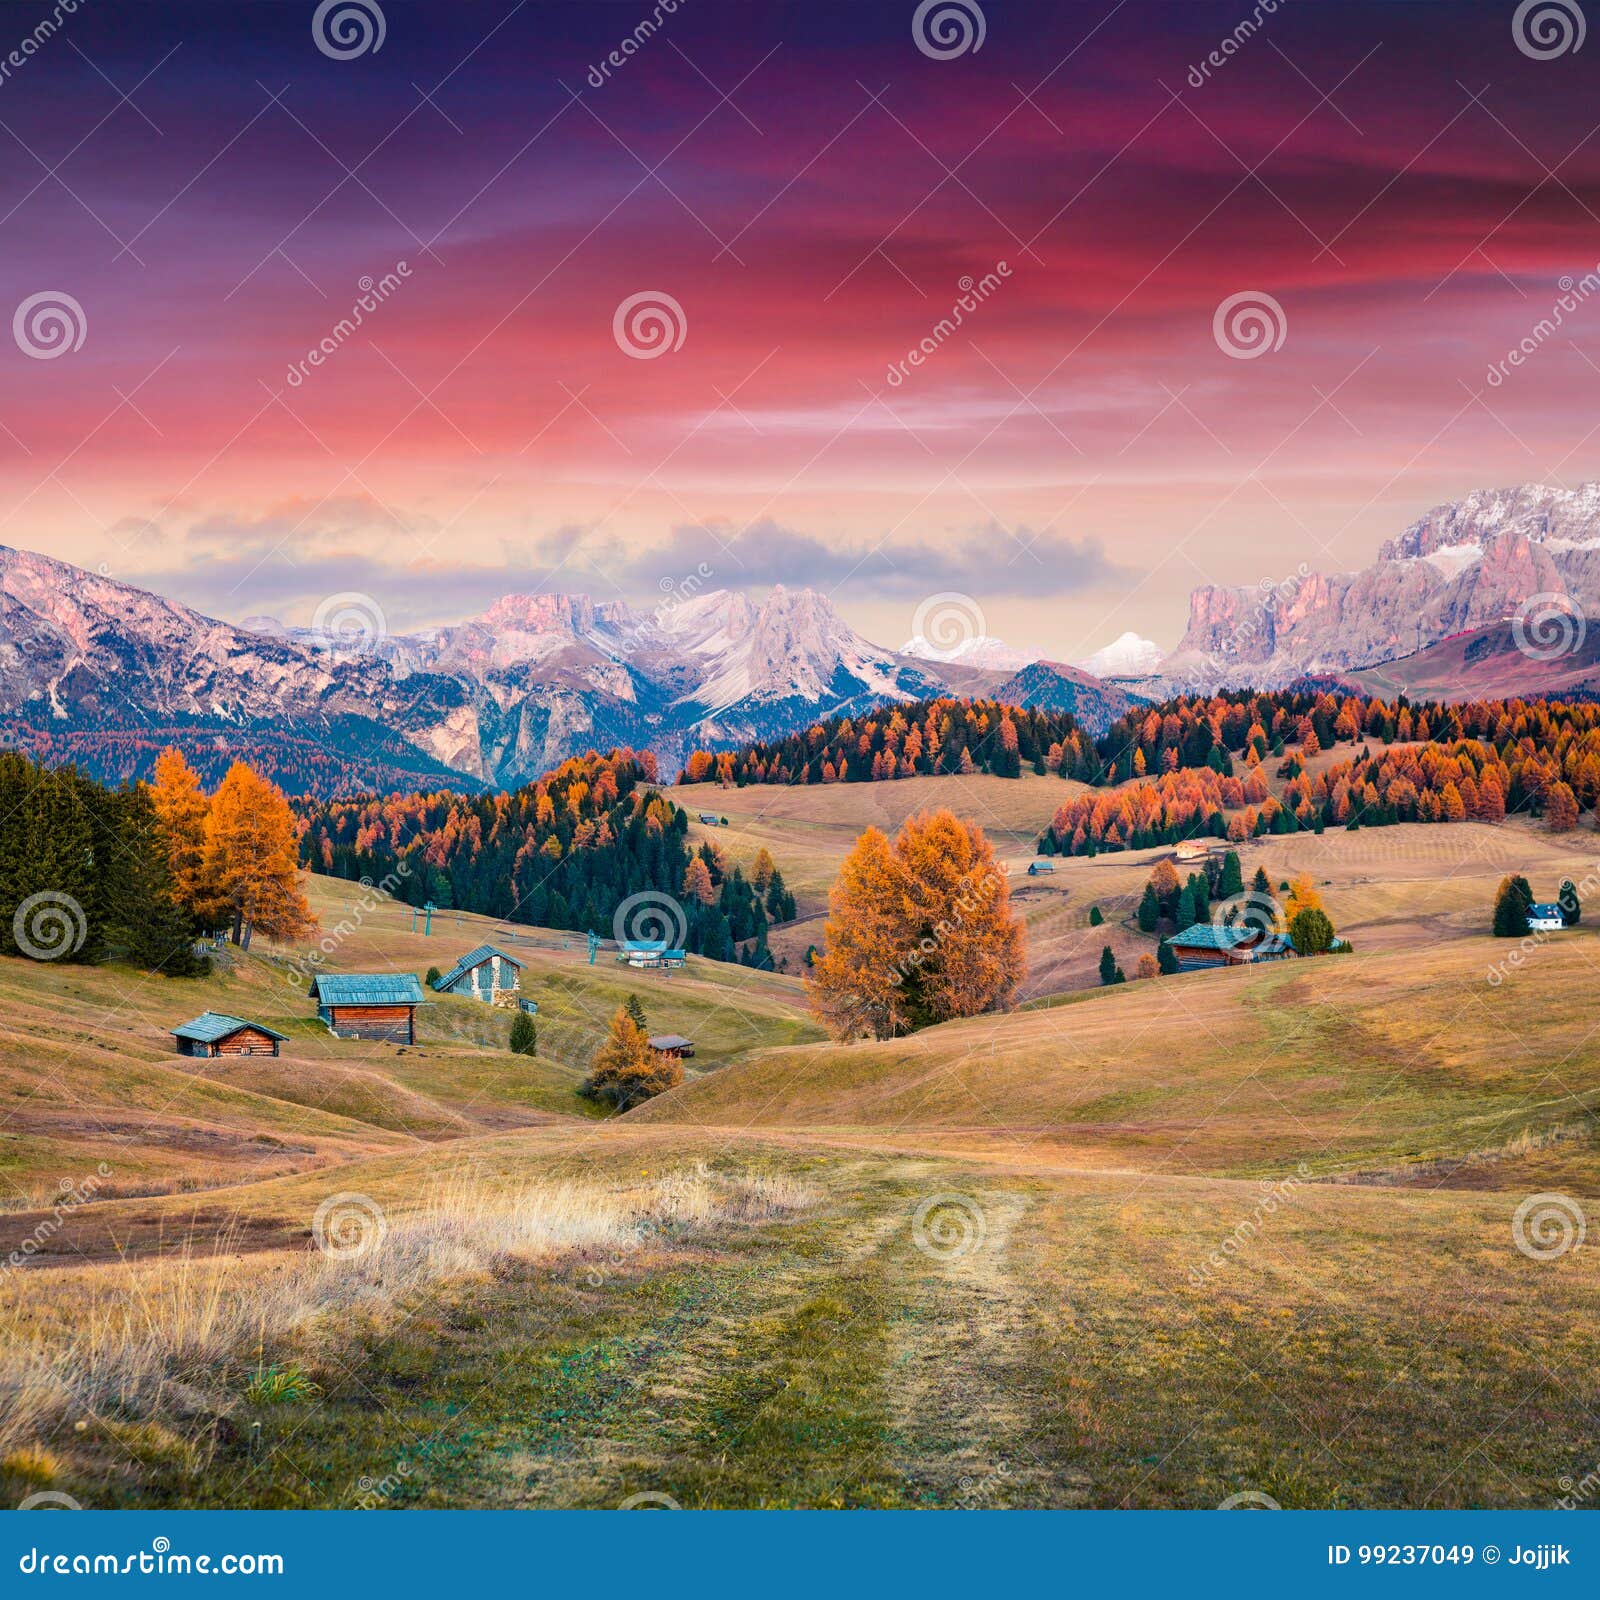 Amazing Autumn Scenery Of Alpe Di Siusi At Sunrise 